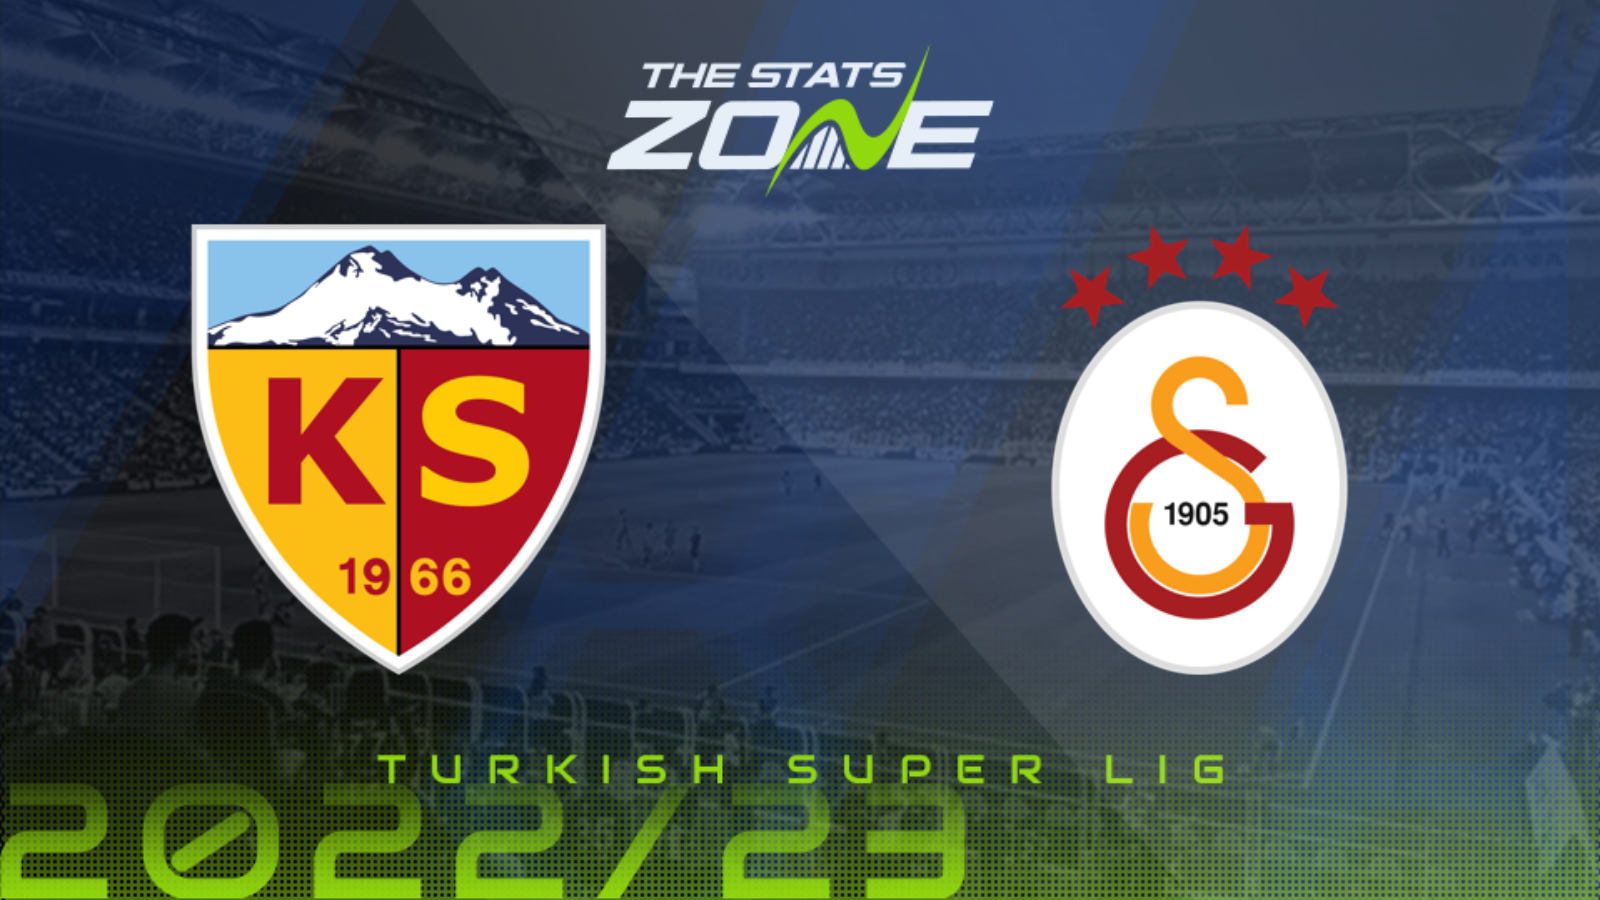 Kayserispor vs galatasaray betting previews sky bet 20 free betting